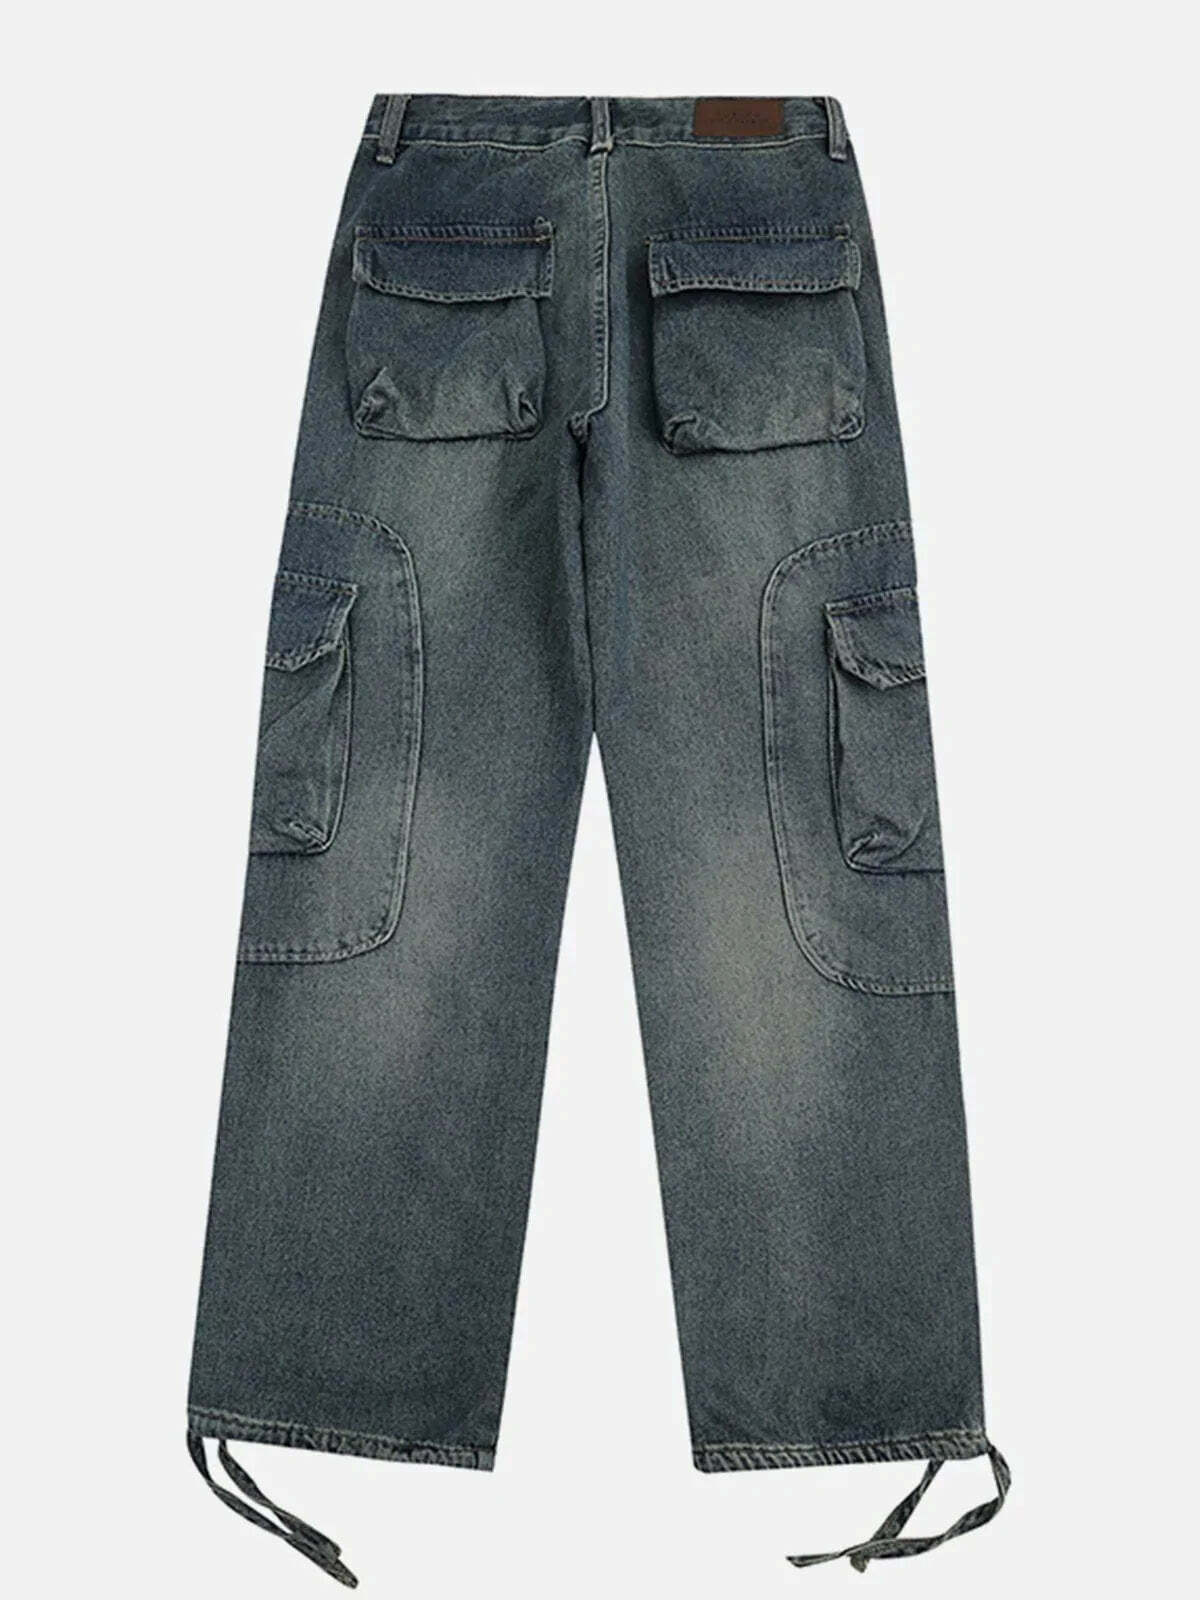 versatile multipocket cargo jeans edgy & functional streetwear 4480